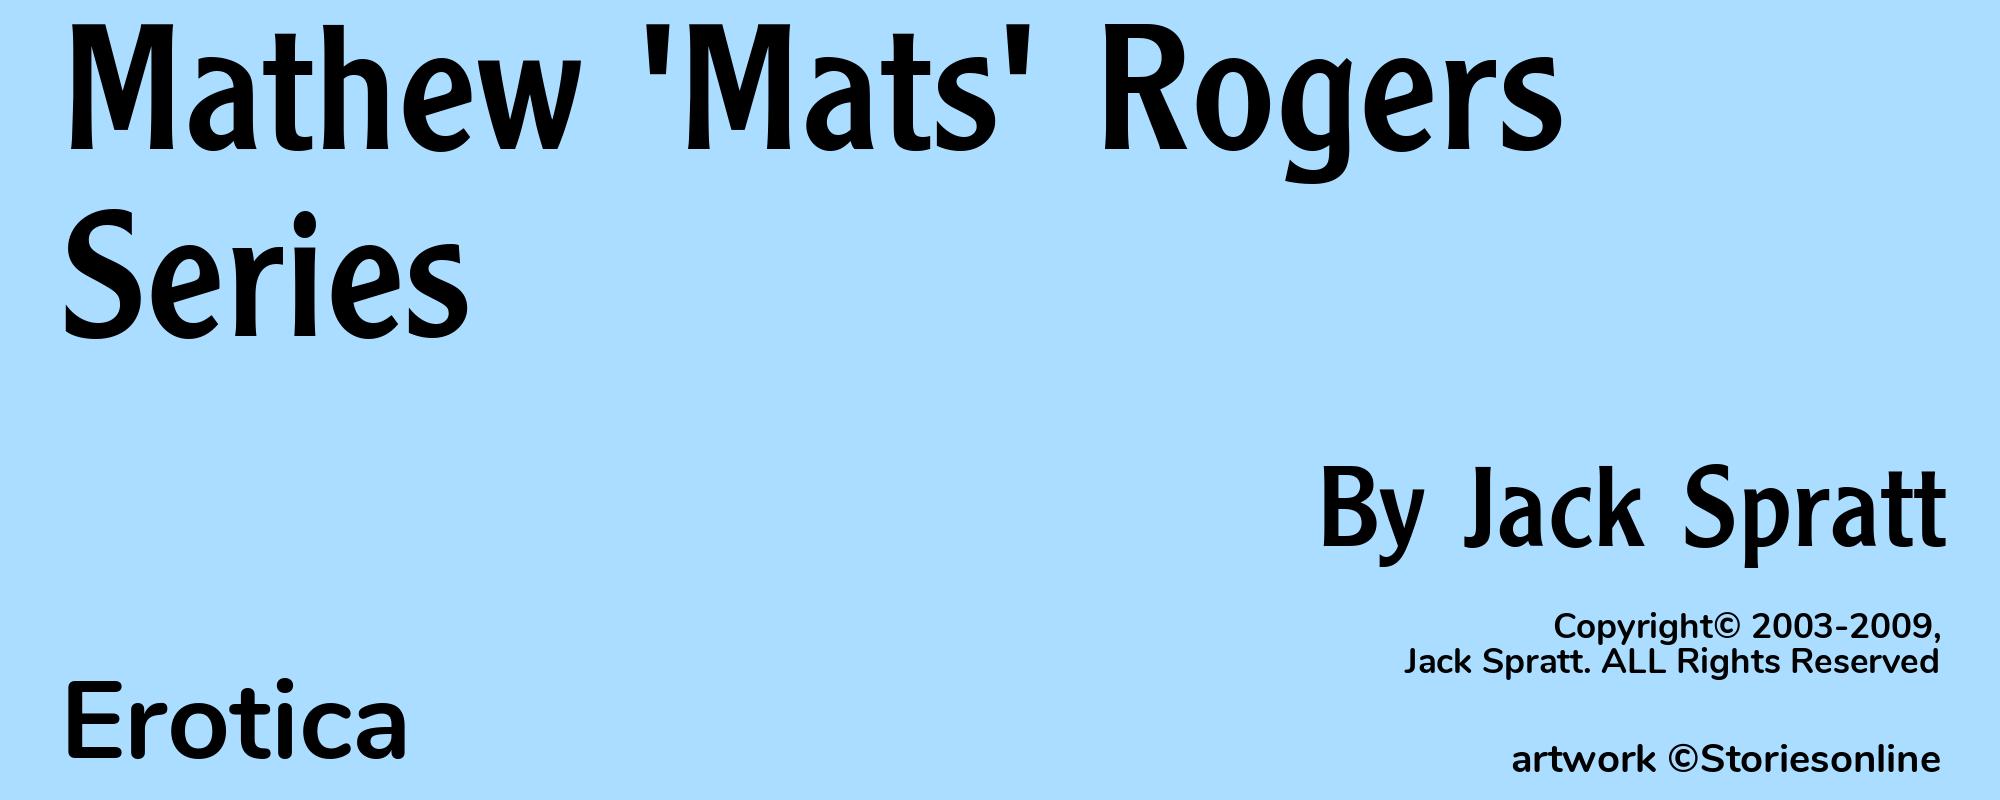 Mathew 'Mats' Rogers Series - Cover